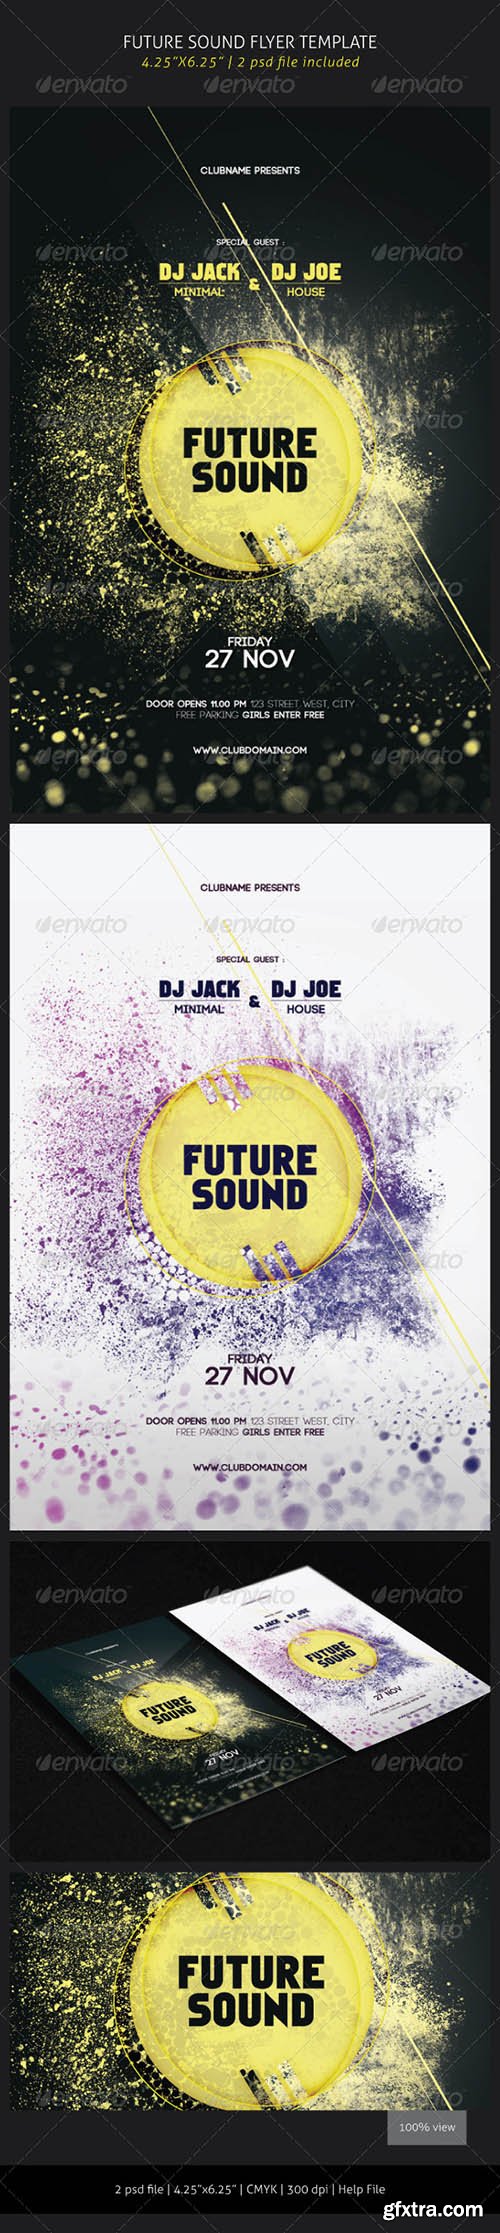 Future Sound Flyer Template 5868032